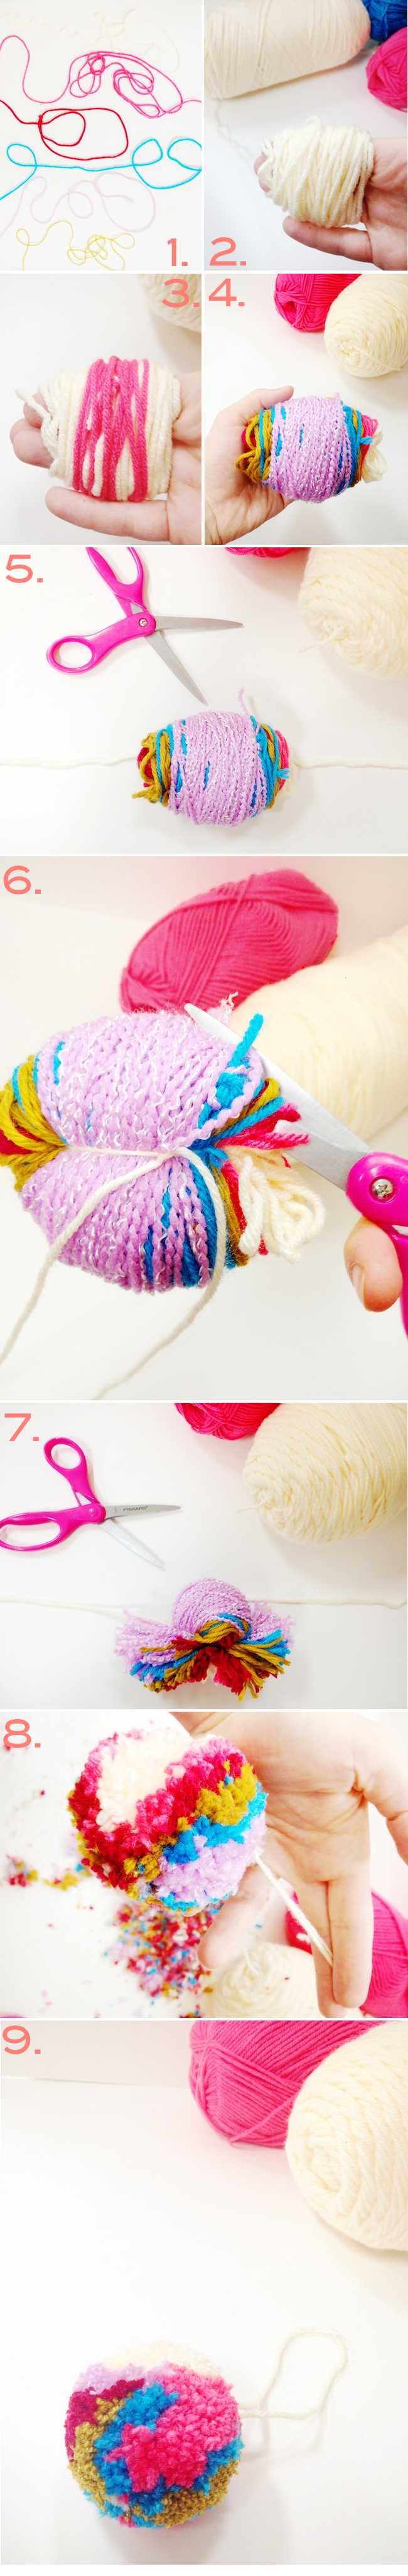 A-Lovely-Lark-DIY-Colorful-Yarn-Pom-Pom-Ornament